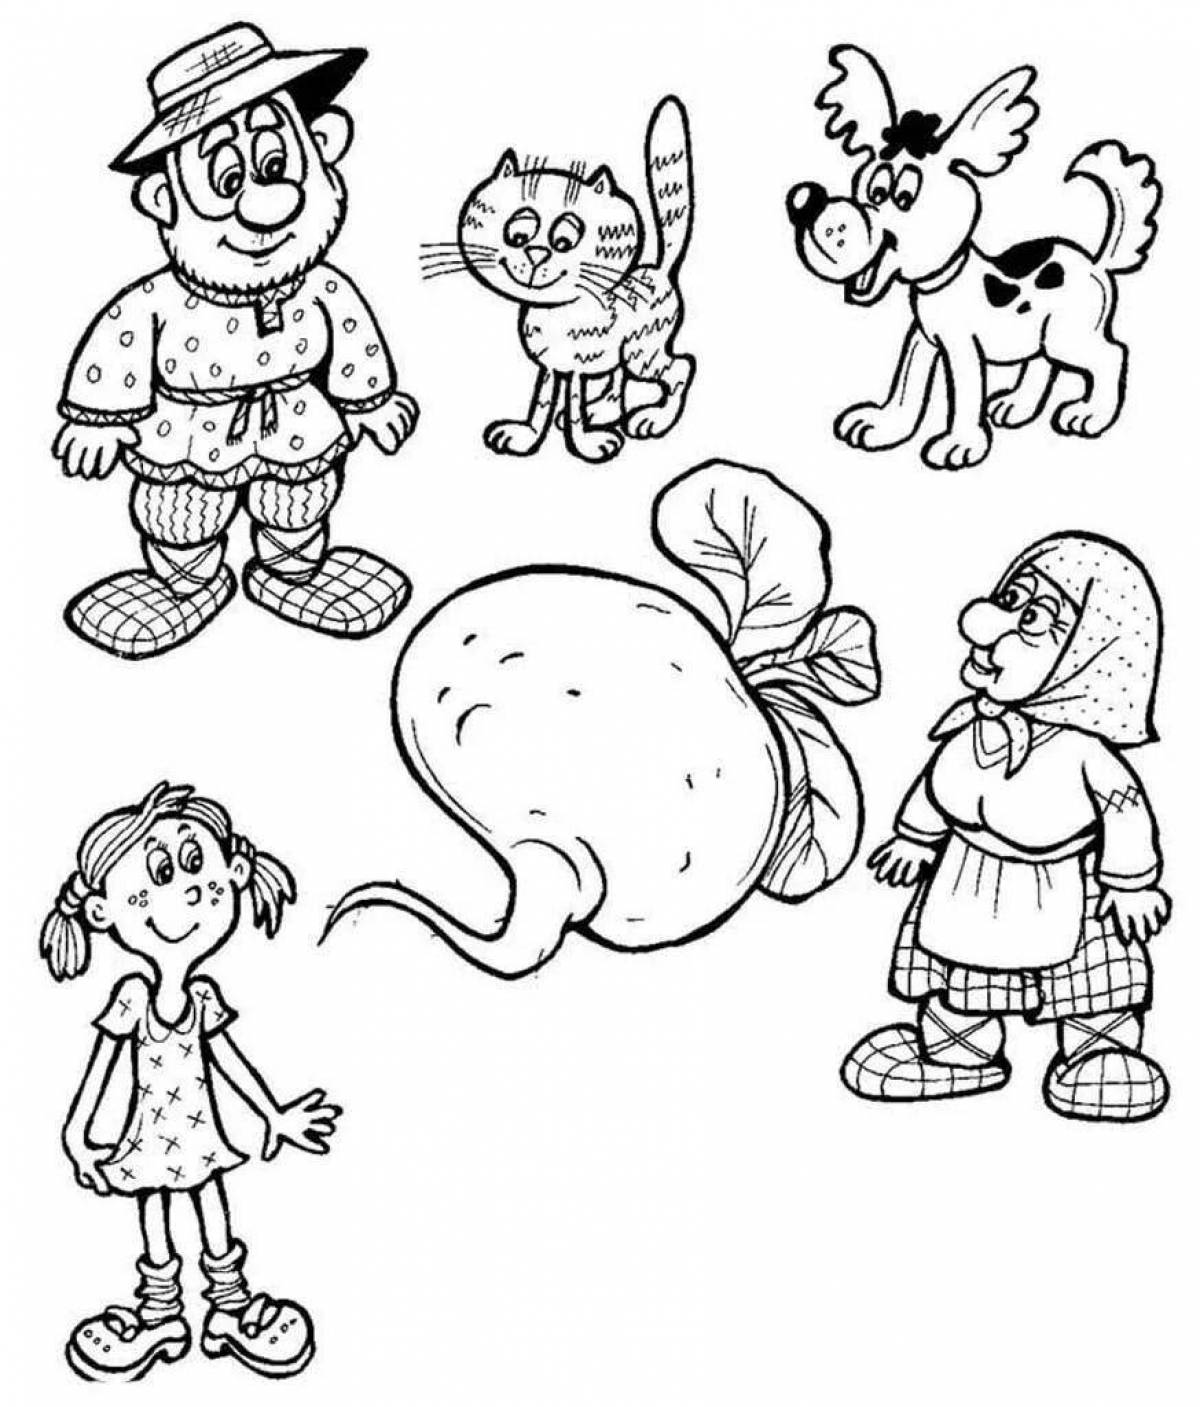 Joyful turnip coloring book for kids